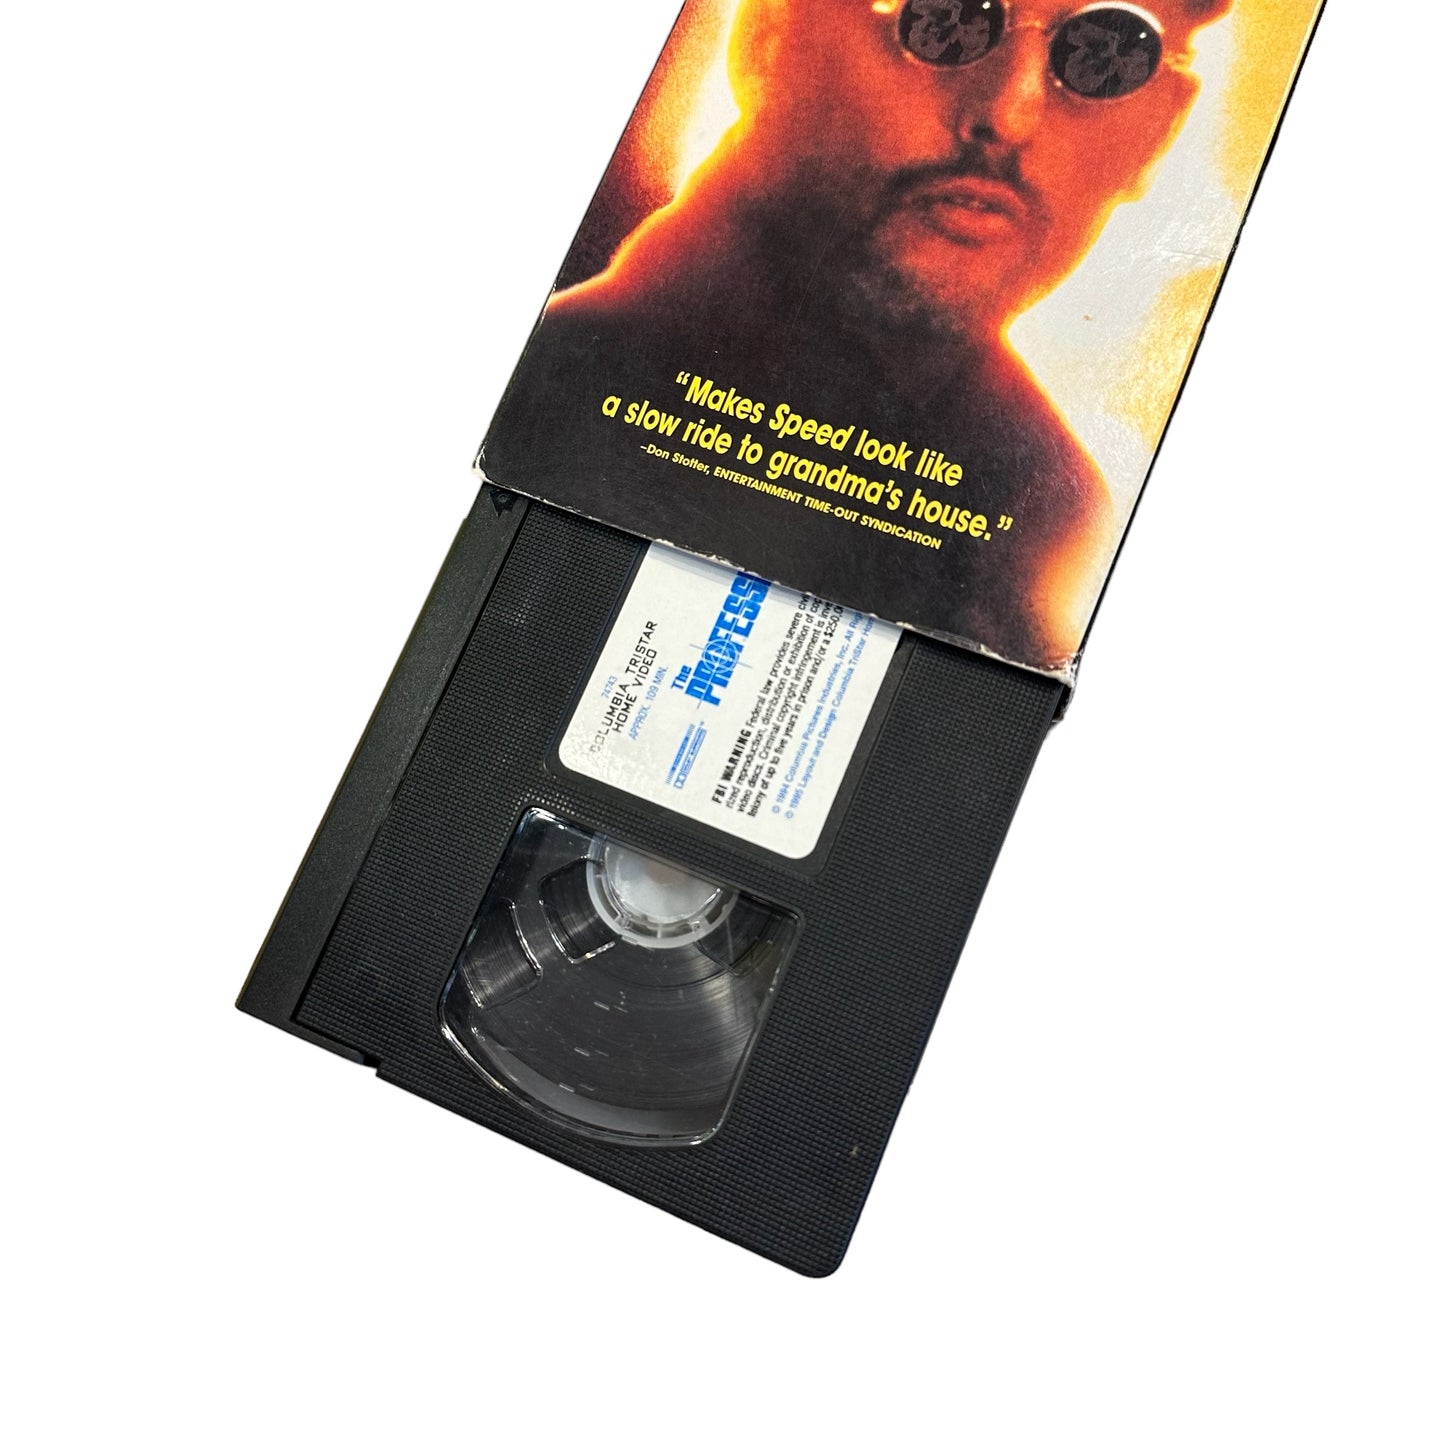 VHS ビデオテープ 輸入版 レオン The Professional 海外版 USA アメリカ ヴィンテージ ビデオ 紙ジャケ